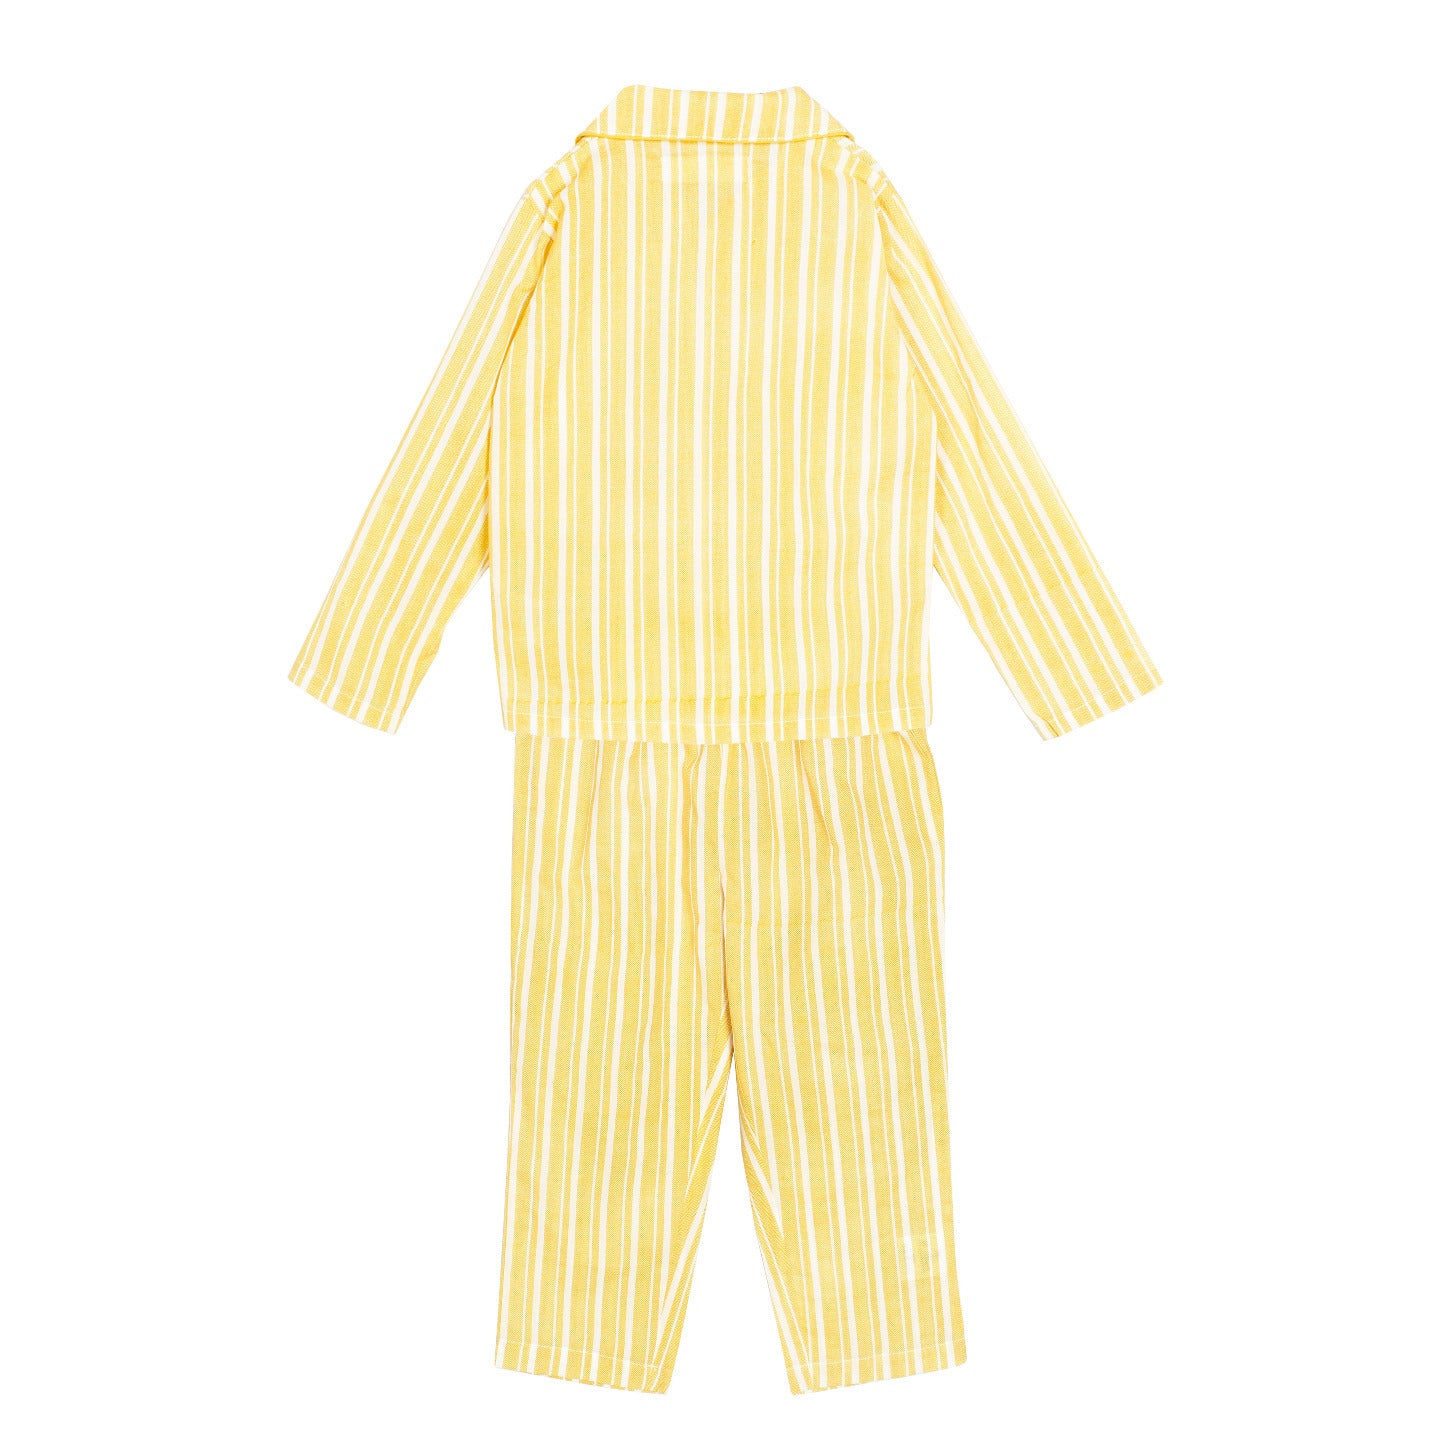 Printed unisex Night Suit Chevron Stripe Yellow